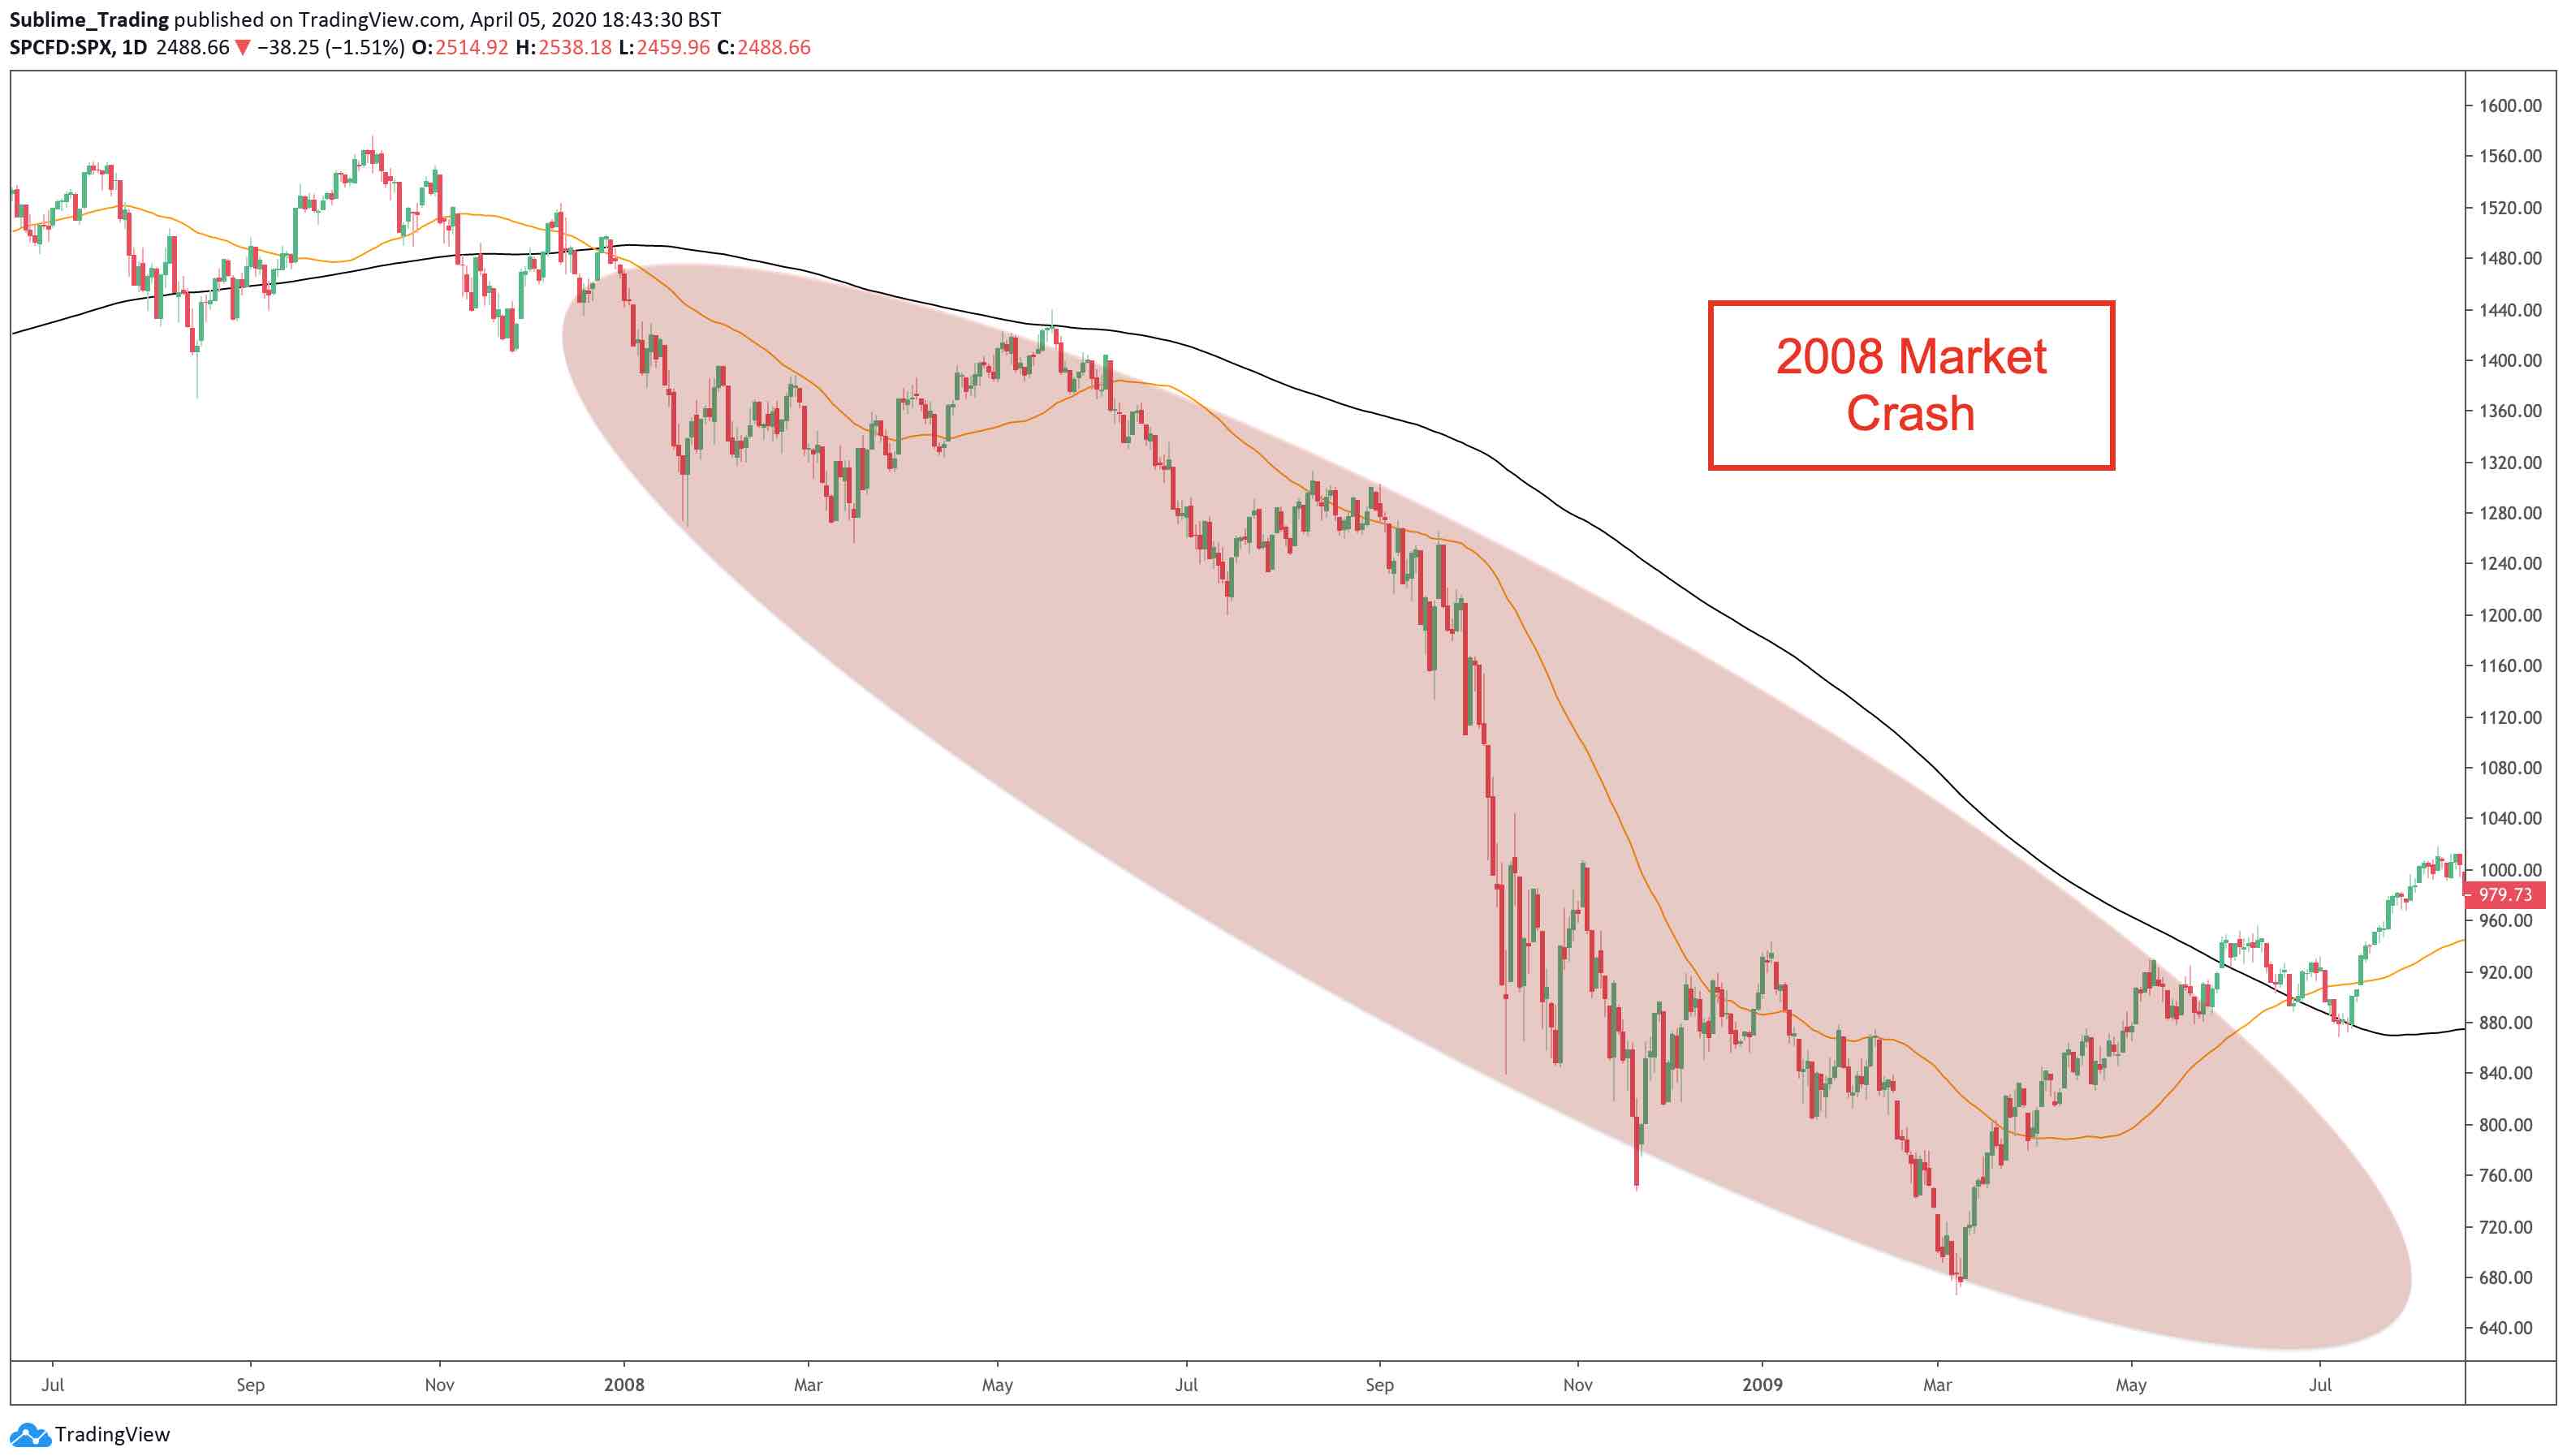 The 2008 market crash on the daily timeframe